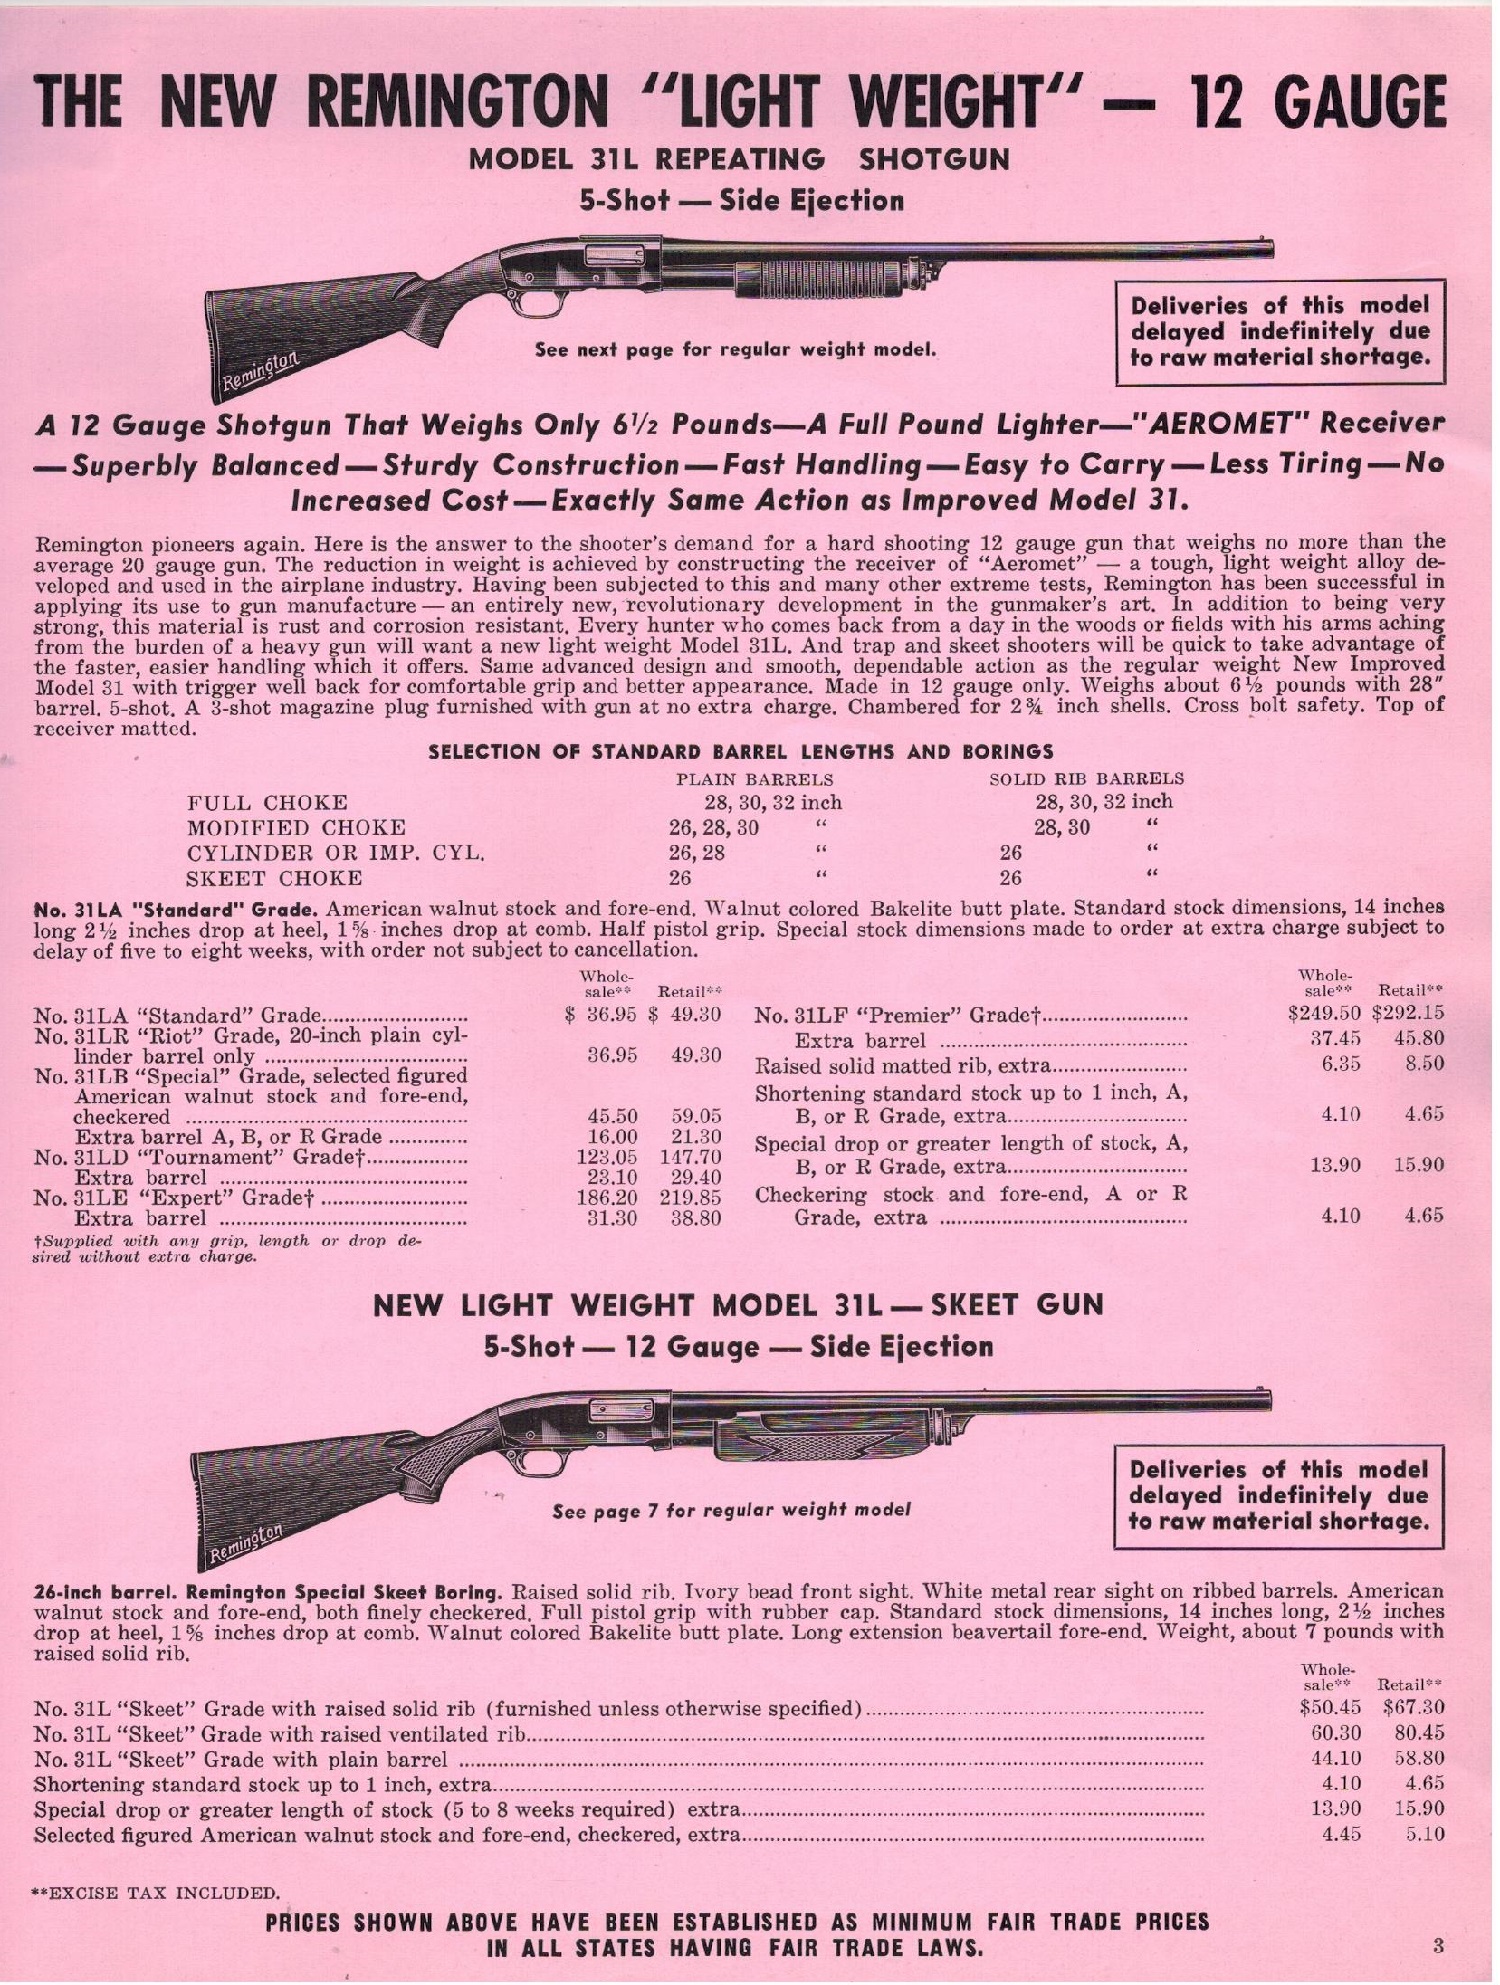 Model 31L June 10, 1941 catalog.jpeg